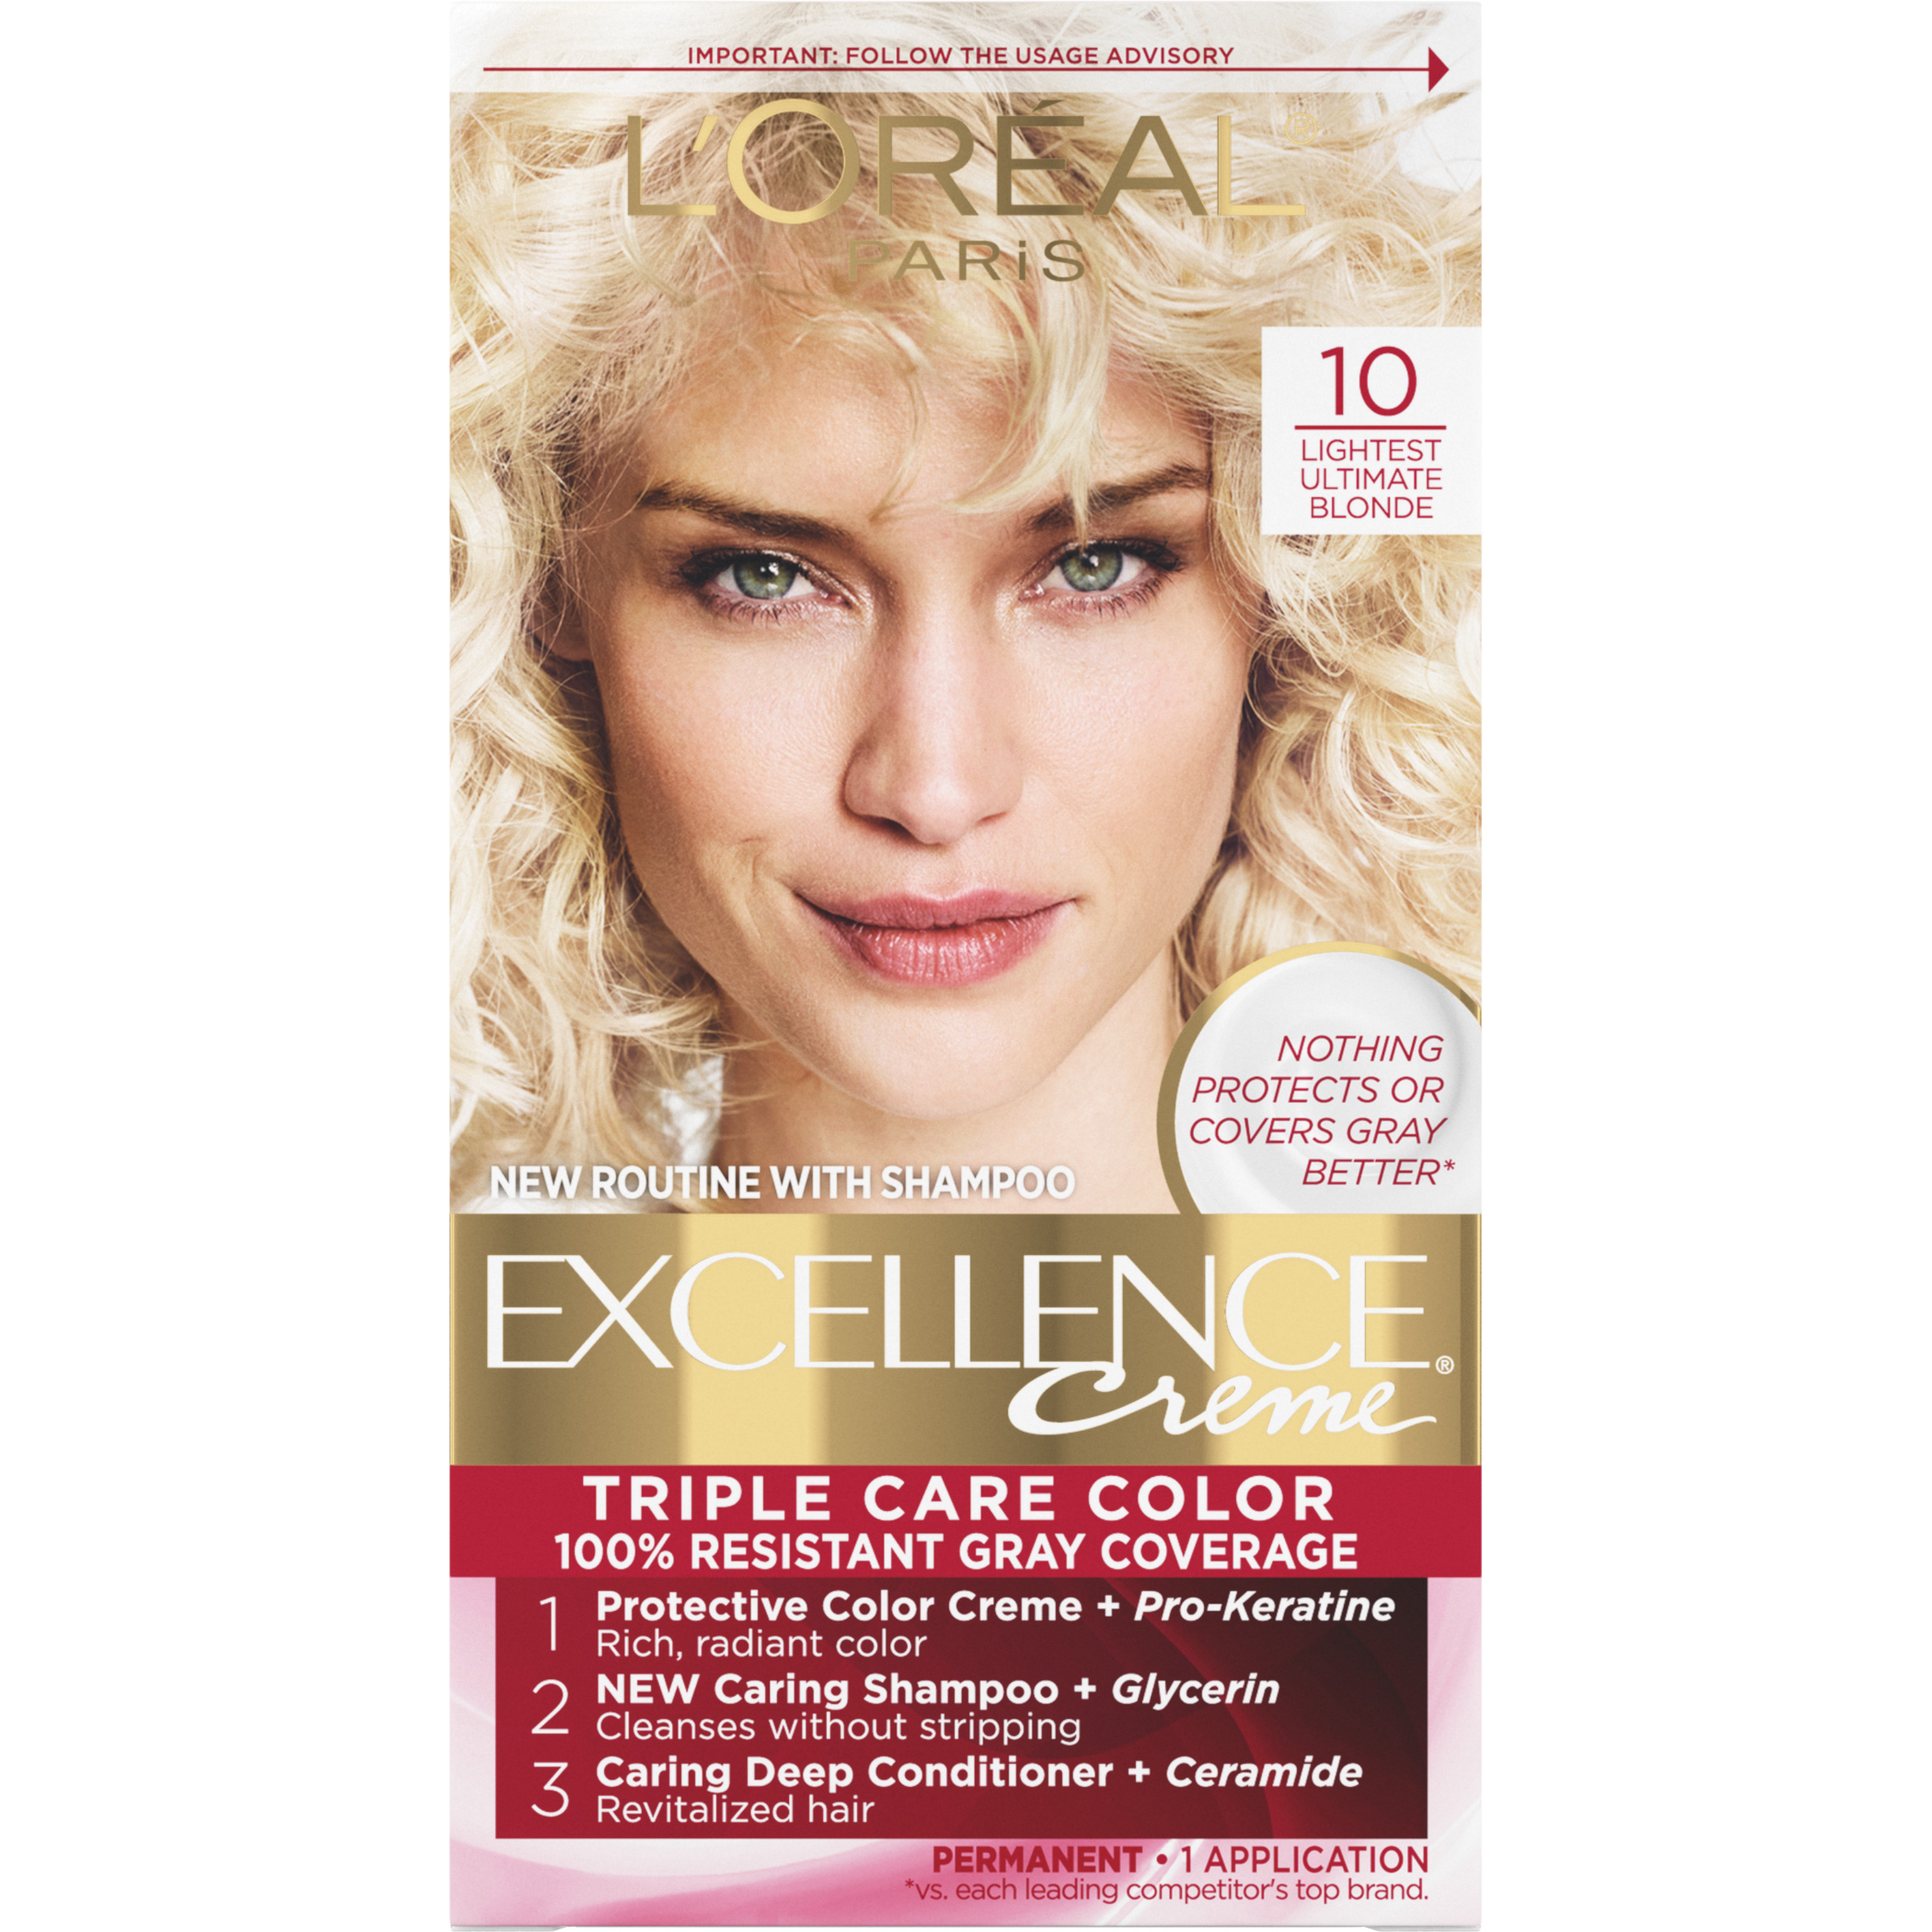 L'Oreal Paris Excellence Creme Permanent Hair Color, 10 Lightest Ultimate Blonde - image 1 of 8